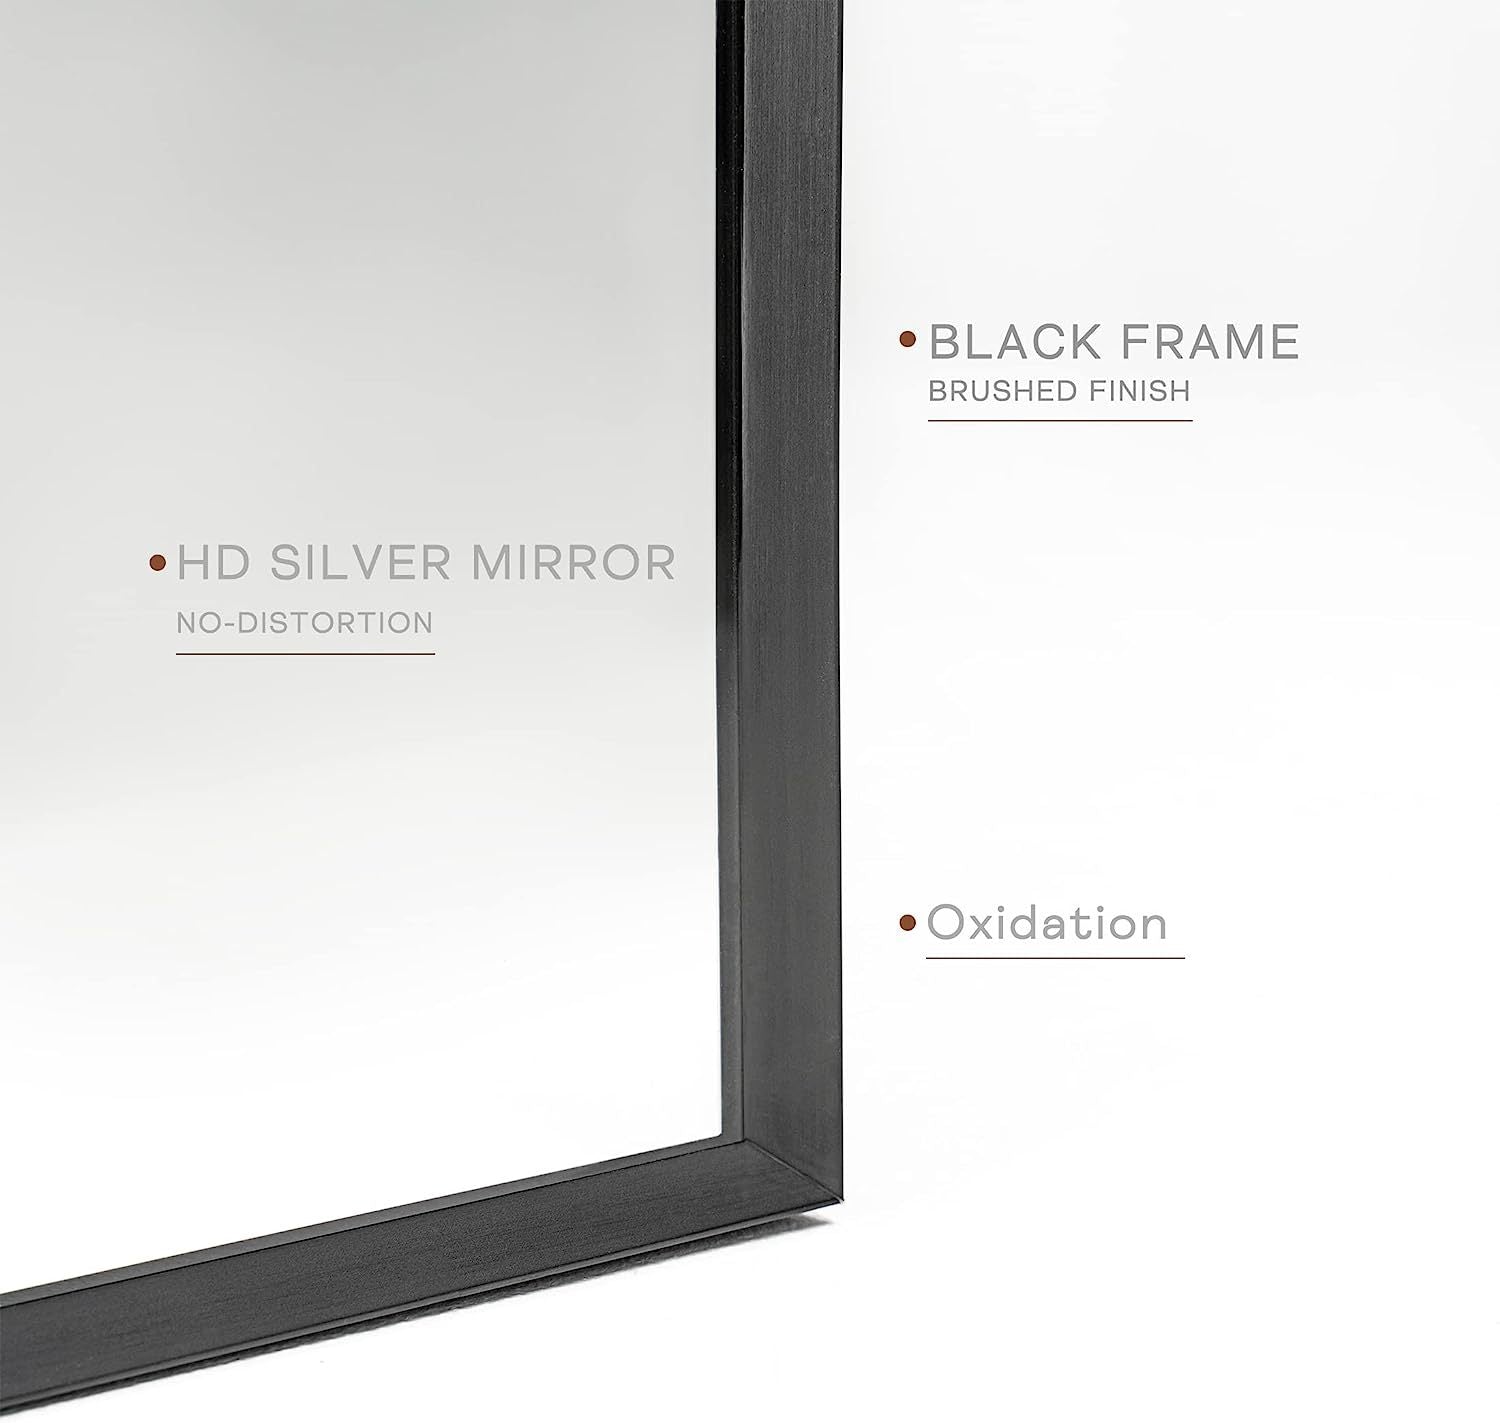 Wall Mirror 30"x20", Bathroom Mirror, Vanity Mirror black-mdf+glass-aluminium